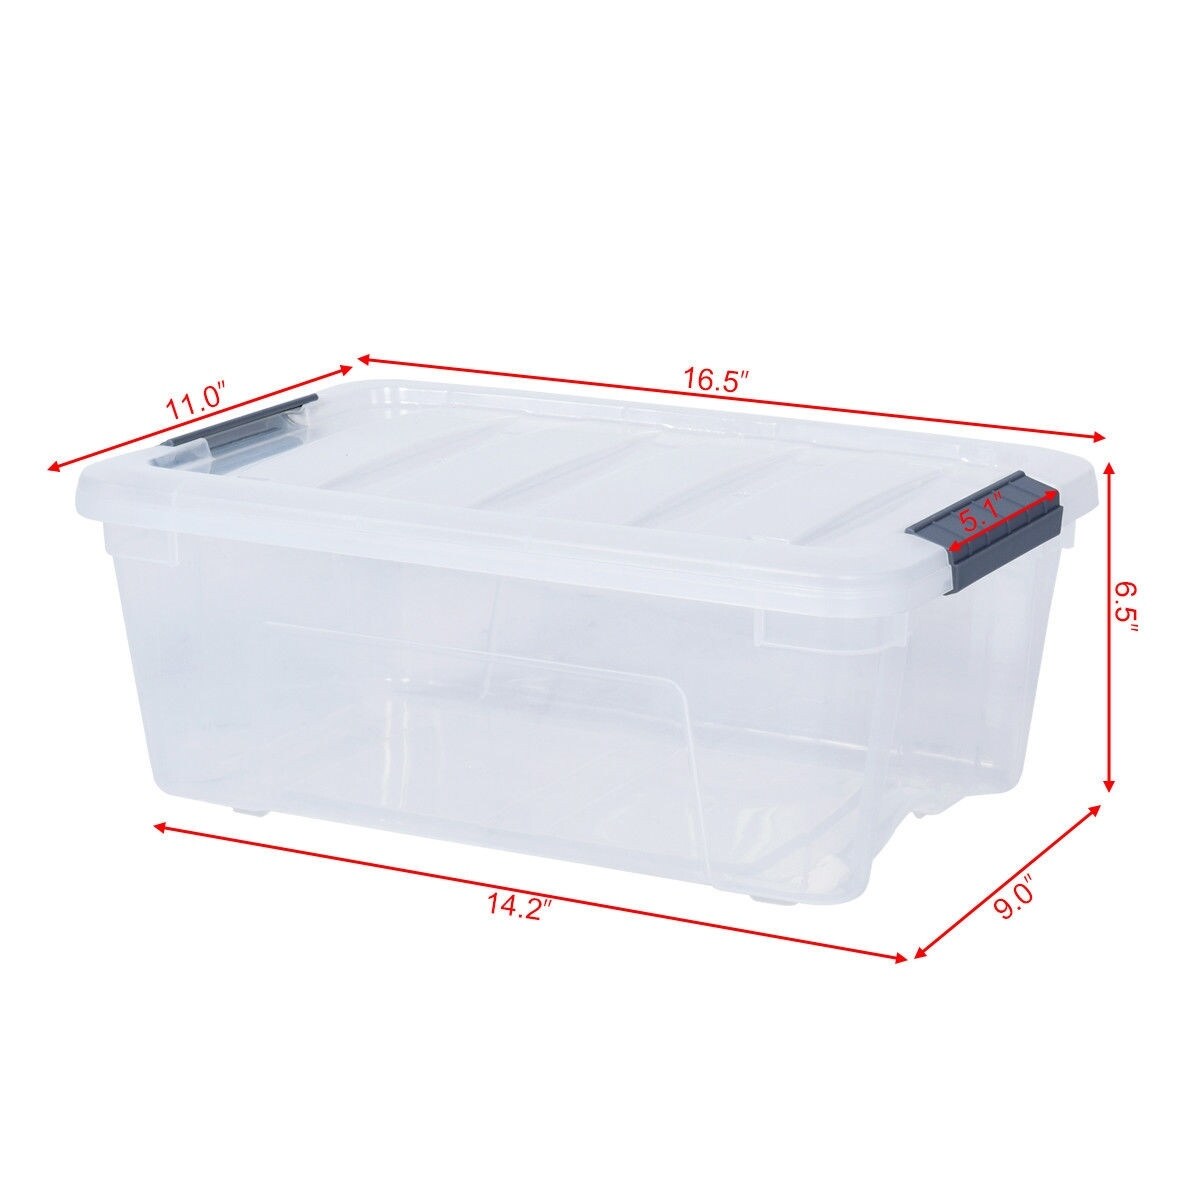 Rubbermaid Classic Clear 12 Quart Stackable Heavy Duty Plastic Storage Bins  - 1.43 - Bed Bath & Beyond - 36785230